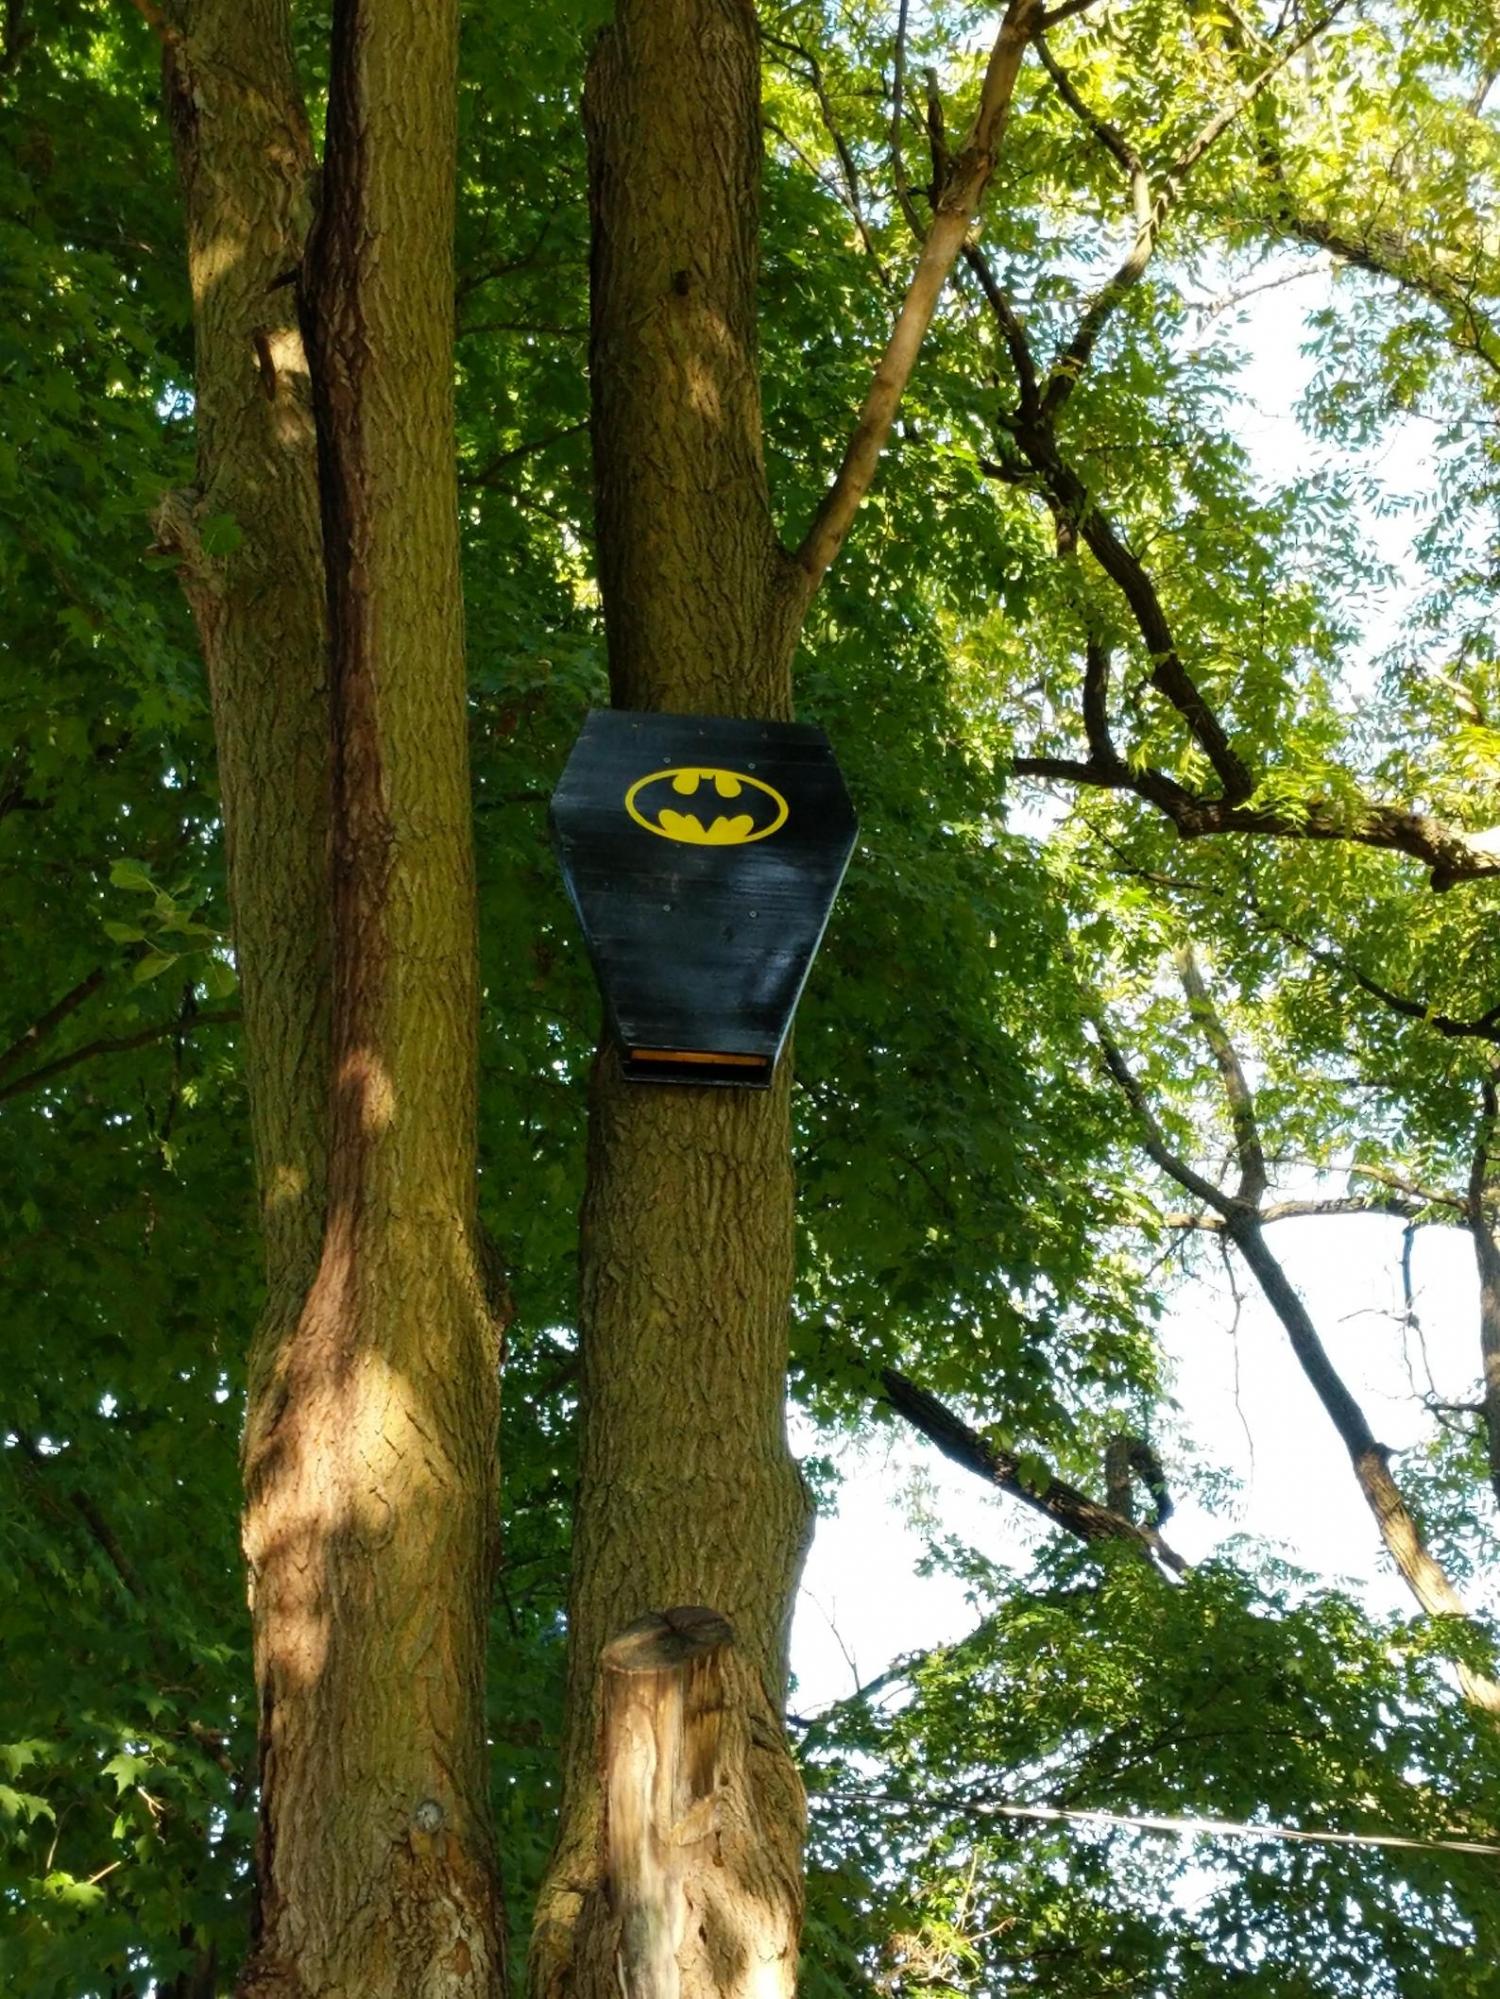 Batman Bat House